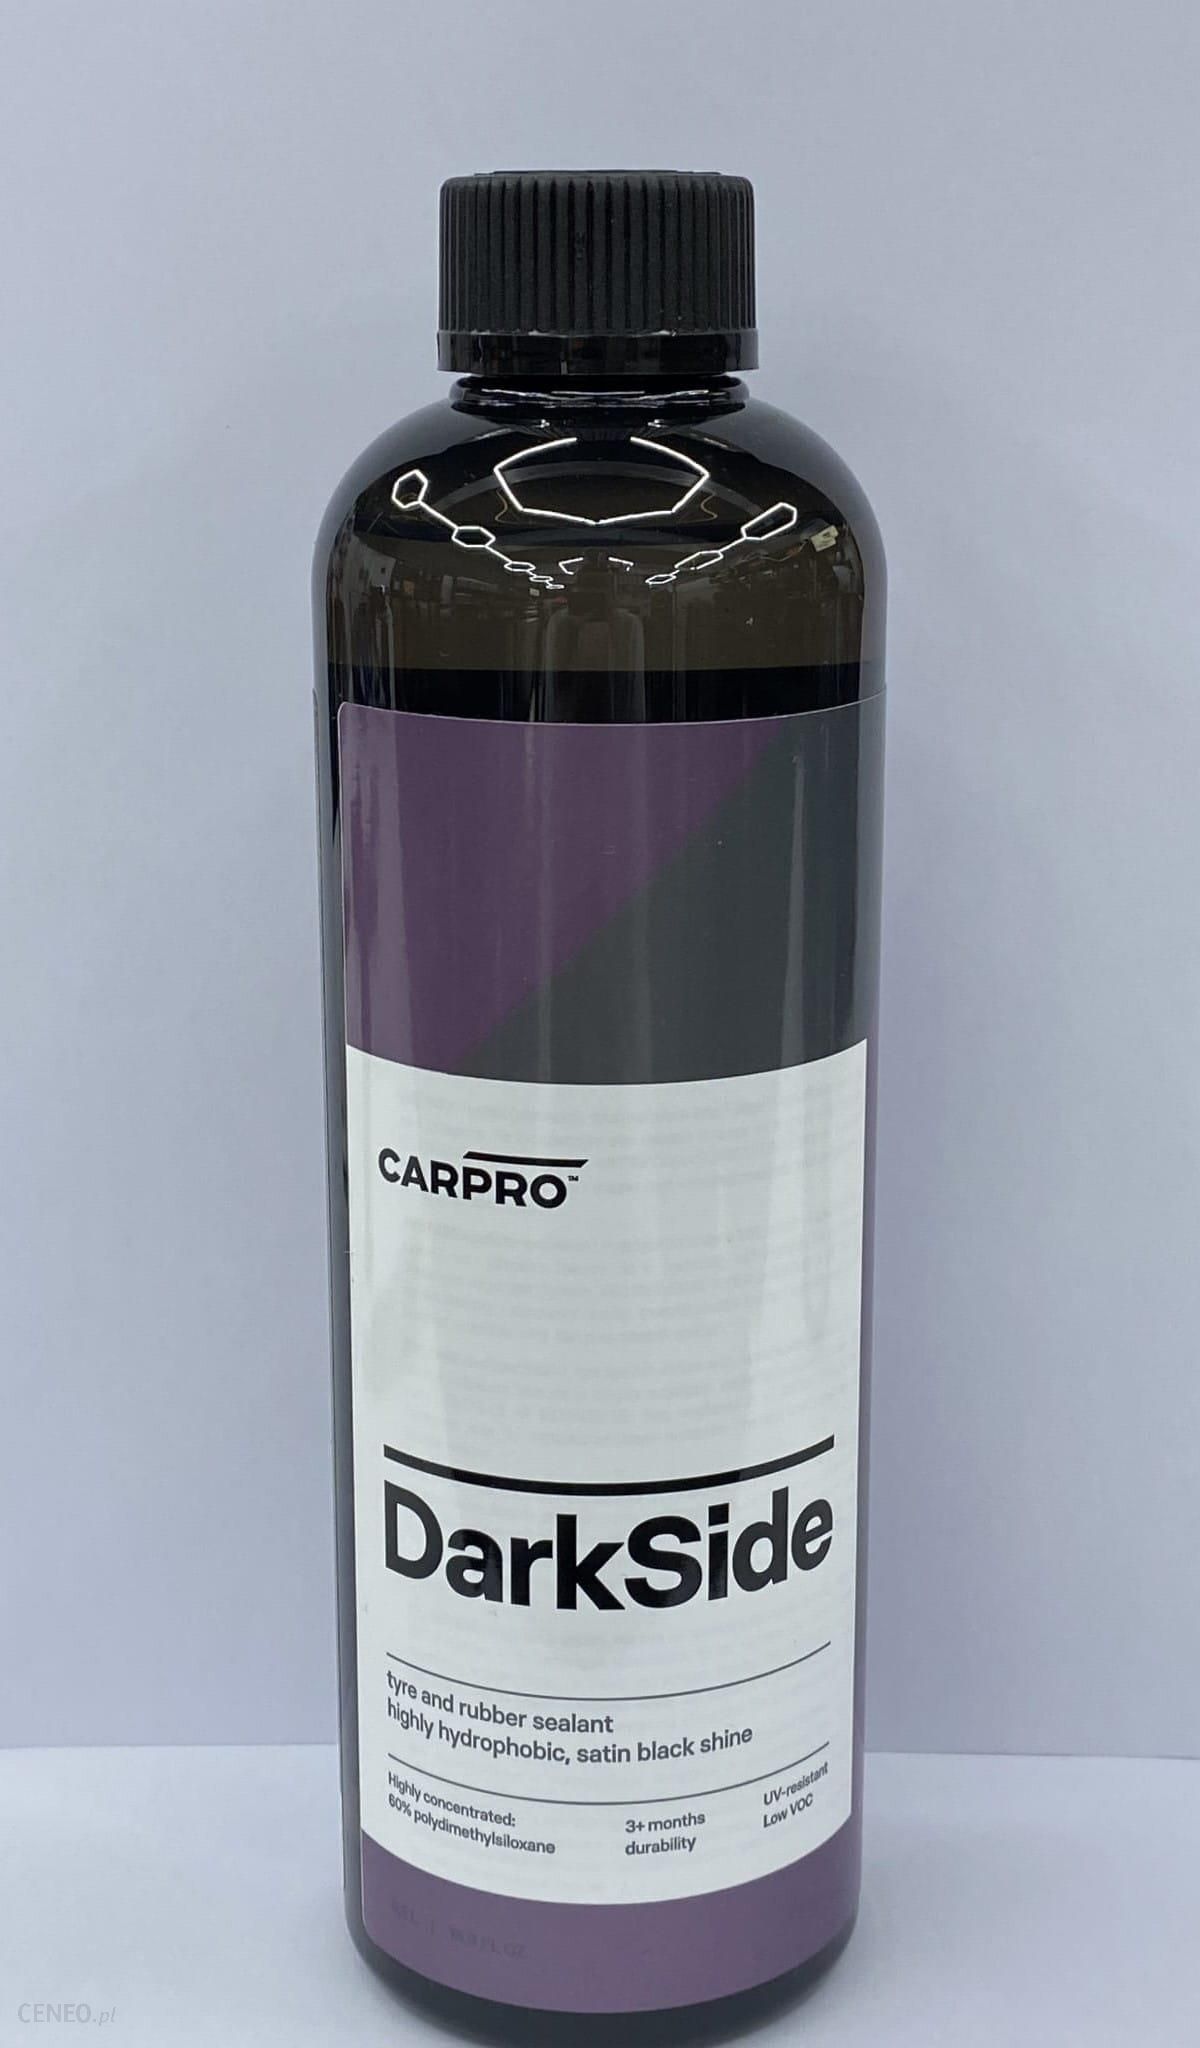 Carpro Darkside